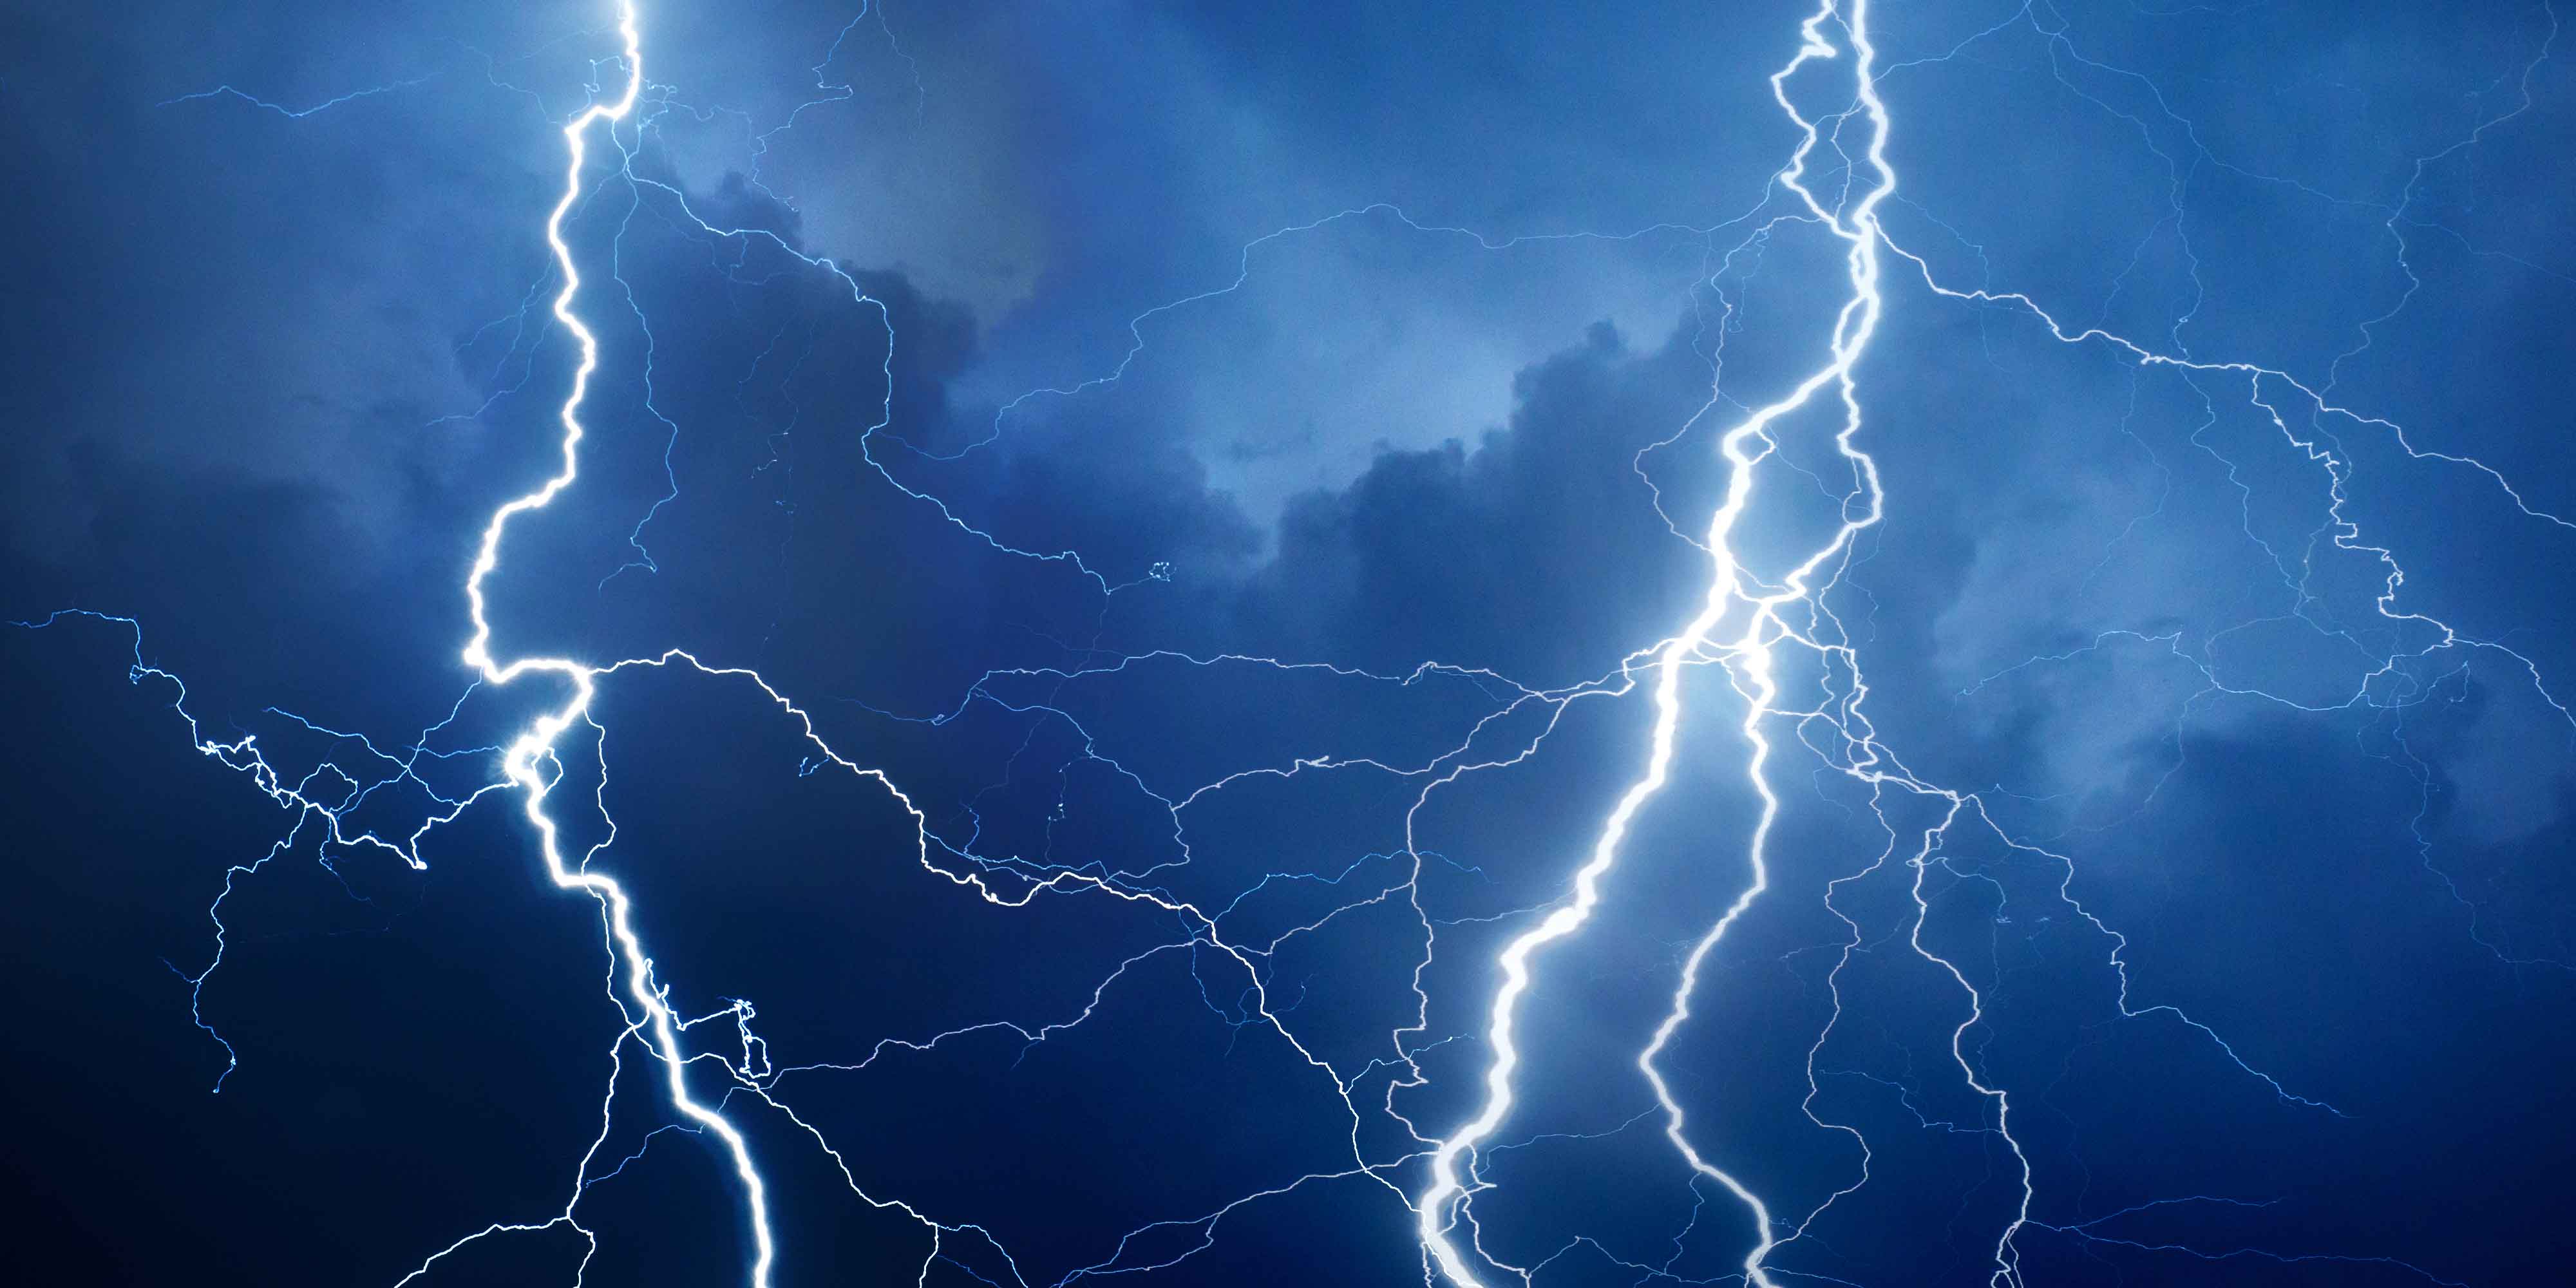 Lightening and Thunderstorms "EMPOWER IAS"